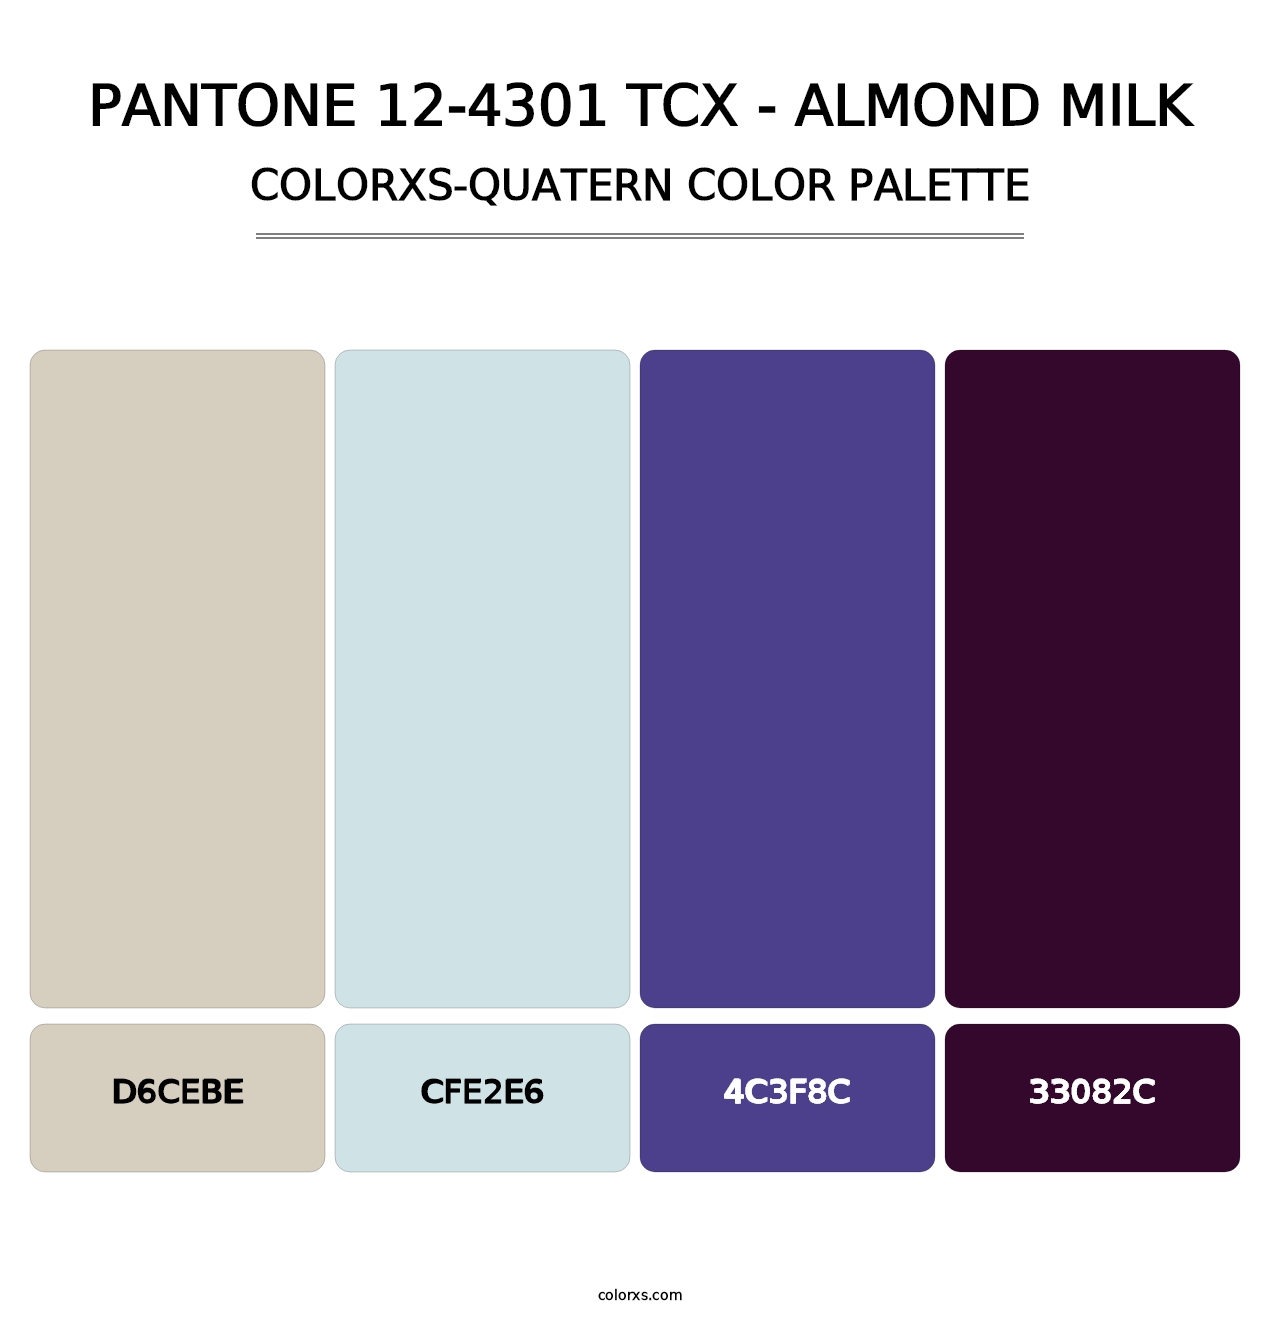 PANTONE 12-4301 TCX - Almond Milk - Colorxs Quatern Palette